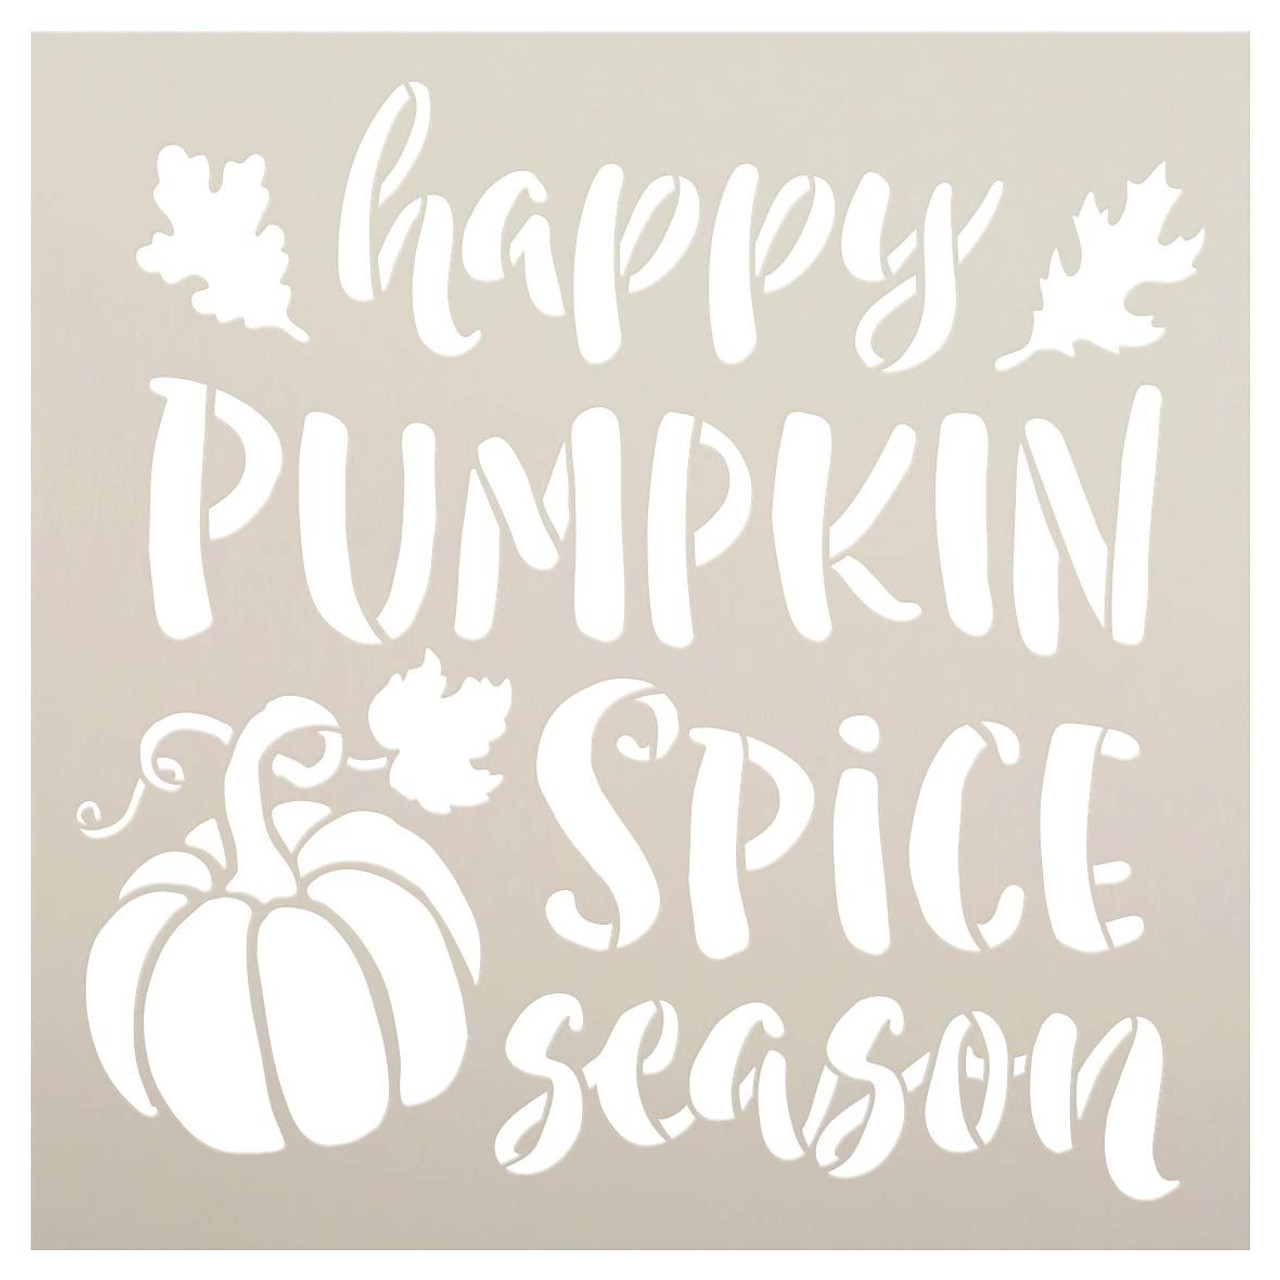 Pumpkin Spice Season Stencil by StudioR12 | DIY Rustic Cursive Leaves | Craft Seasonal Farmhouse Gift | Autumn Home Decor Thanksgiving Halloween | Reusable Mylar Template | Paint Wood Sign